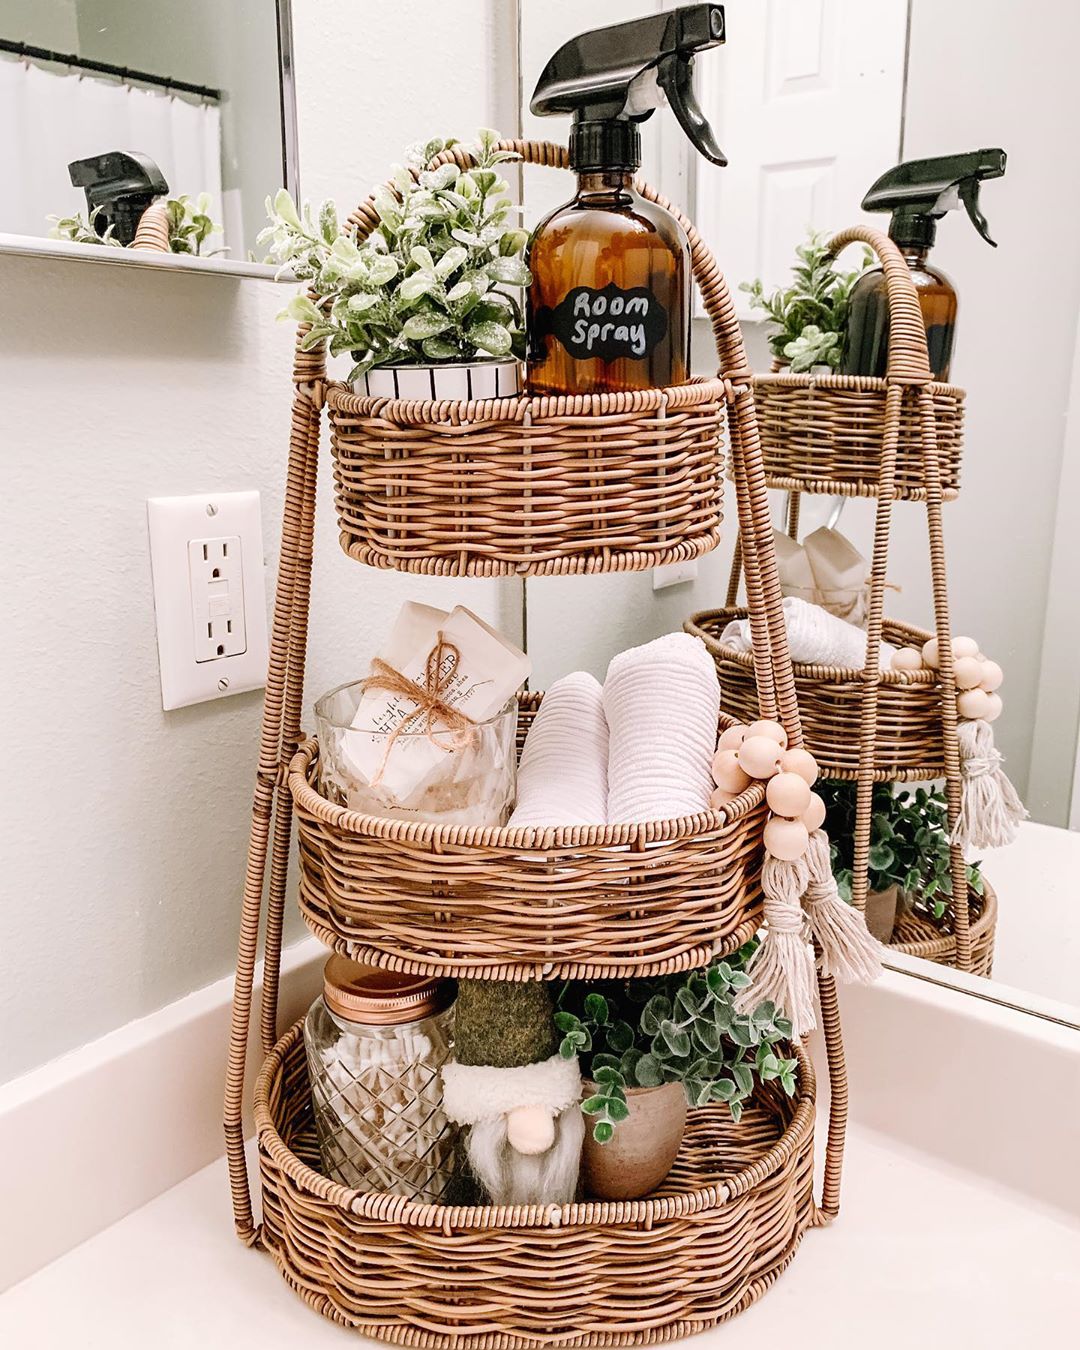 Wicker Basket with Bathroom Supplies. Photo by Instagram user @farmhousebargainhunter